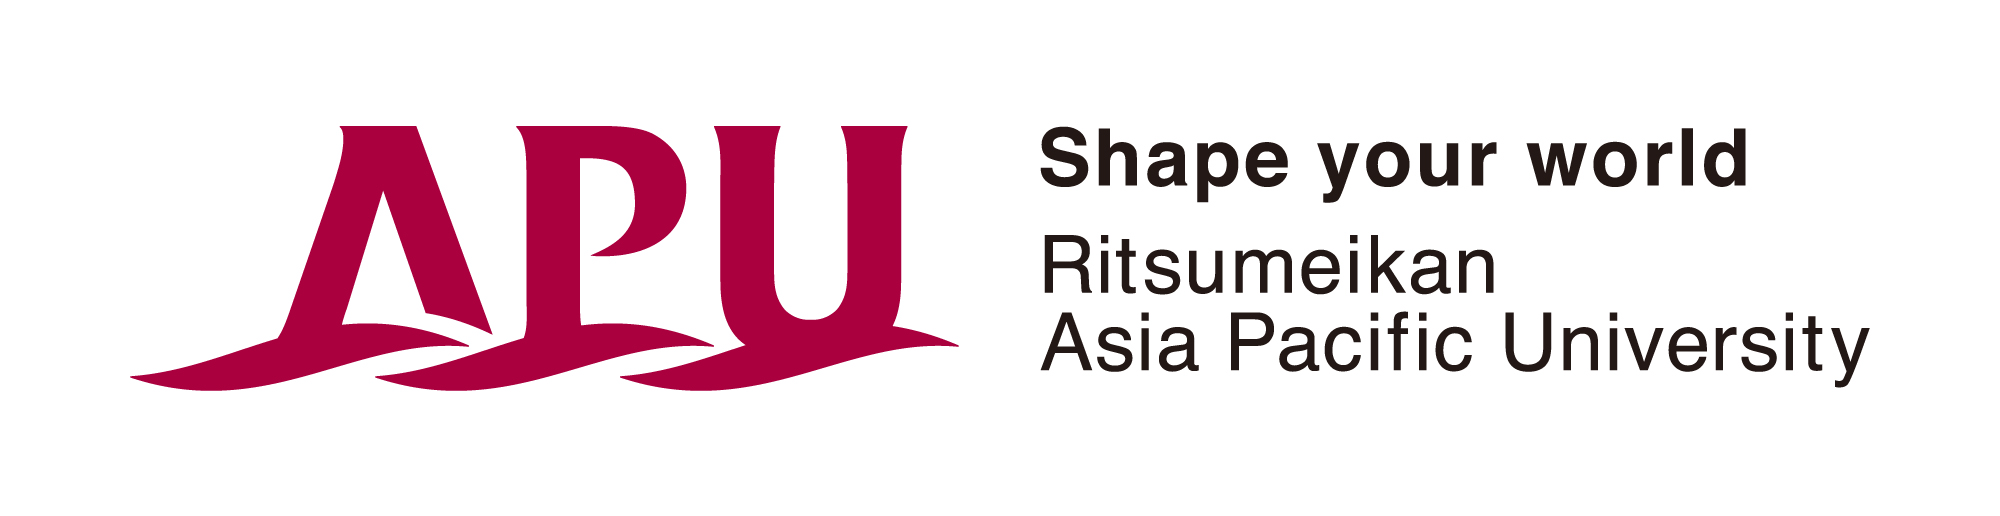 APU(Ritsumeikan Asia Pacific University) Shape your world